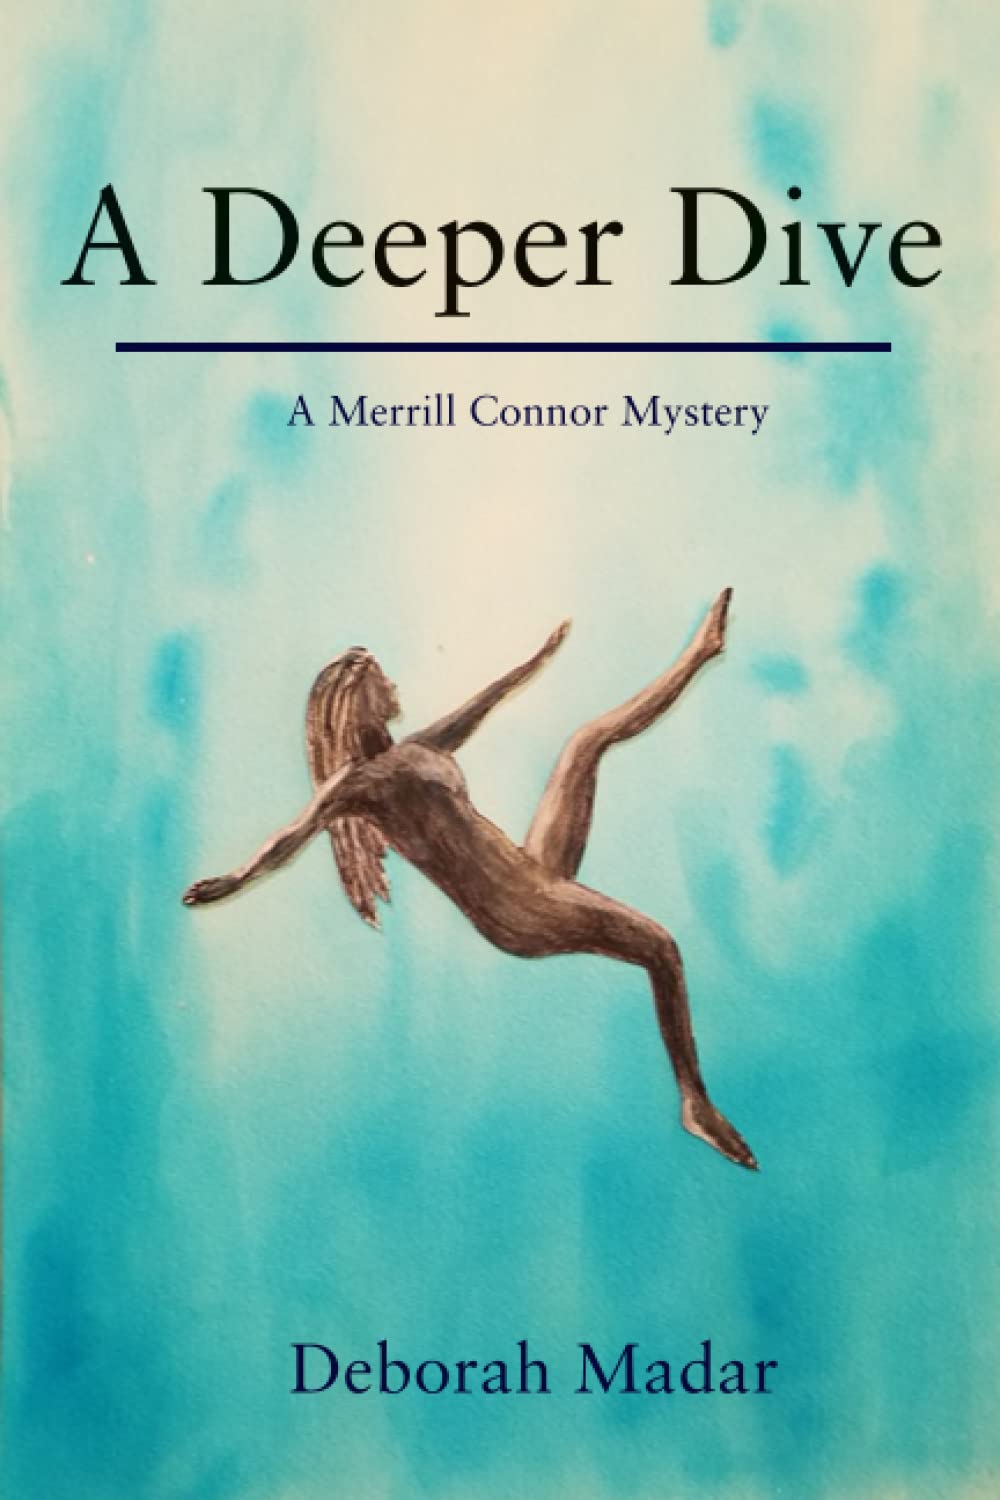 A DEEPER DIVE by Deborah Madar